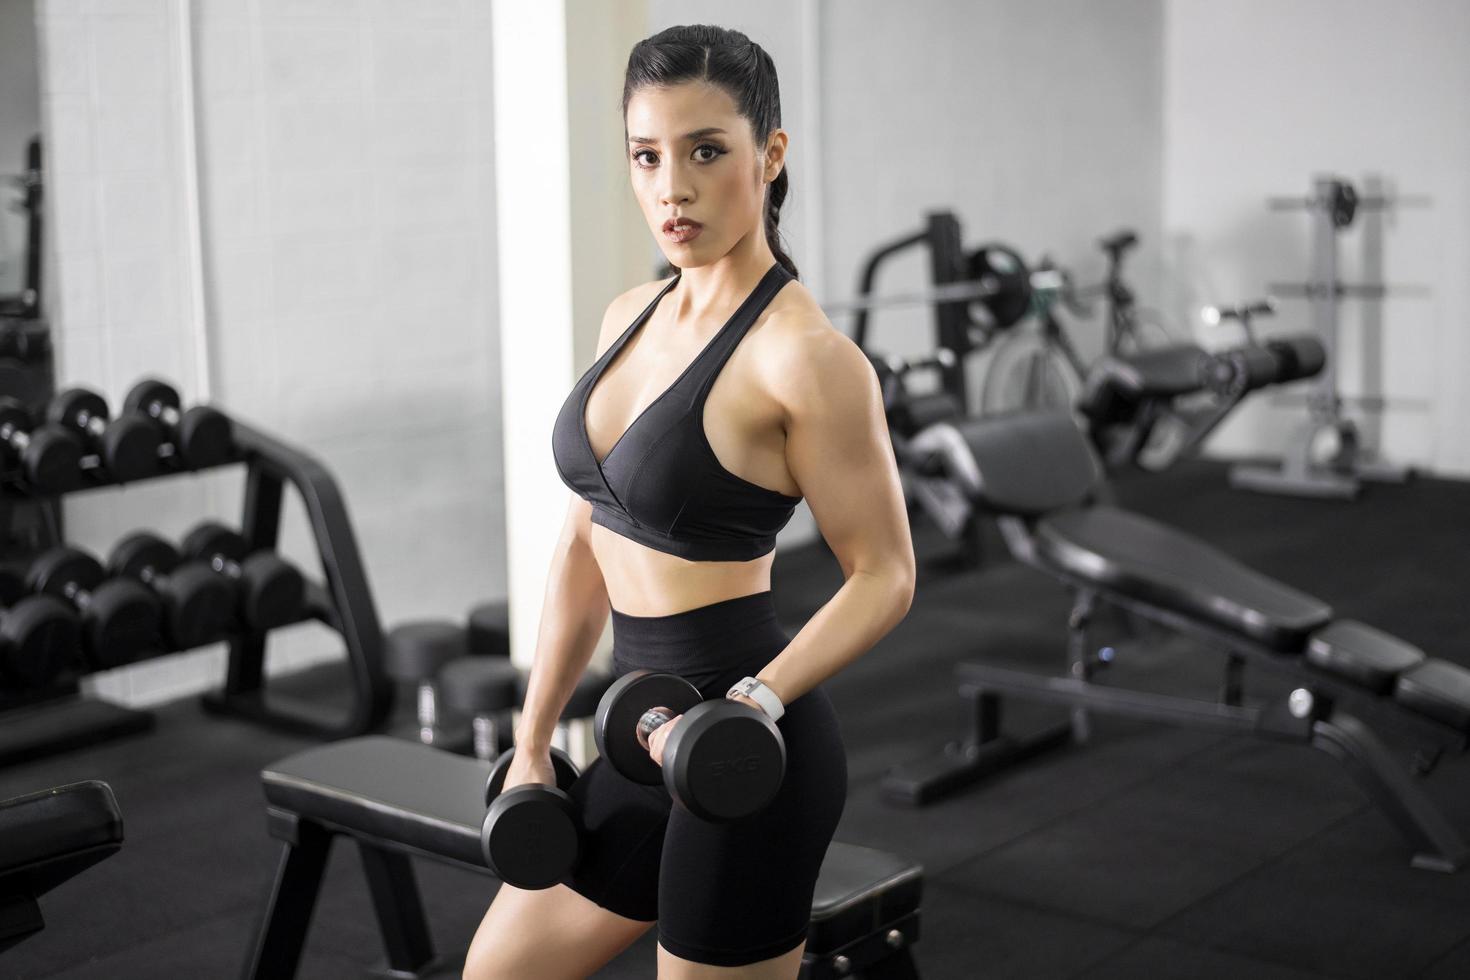 Schöne Frau mit perfektem Körper trainiert im Fitnessstudio foto